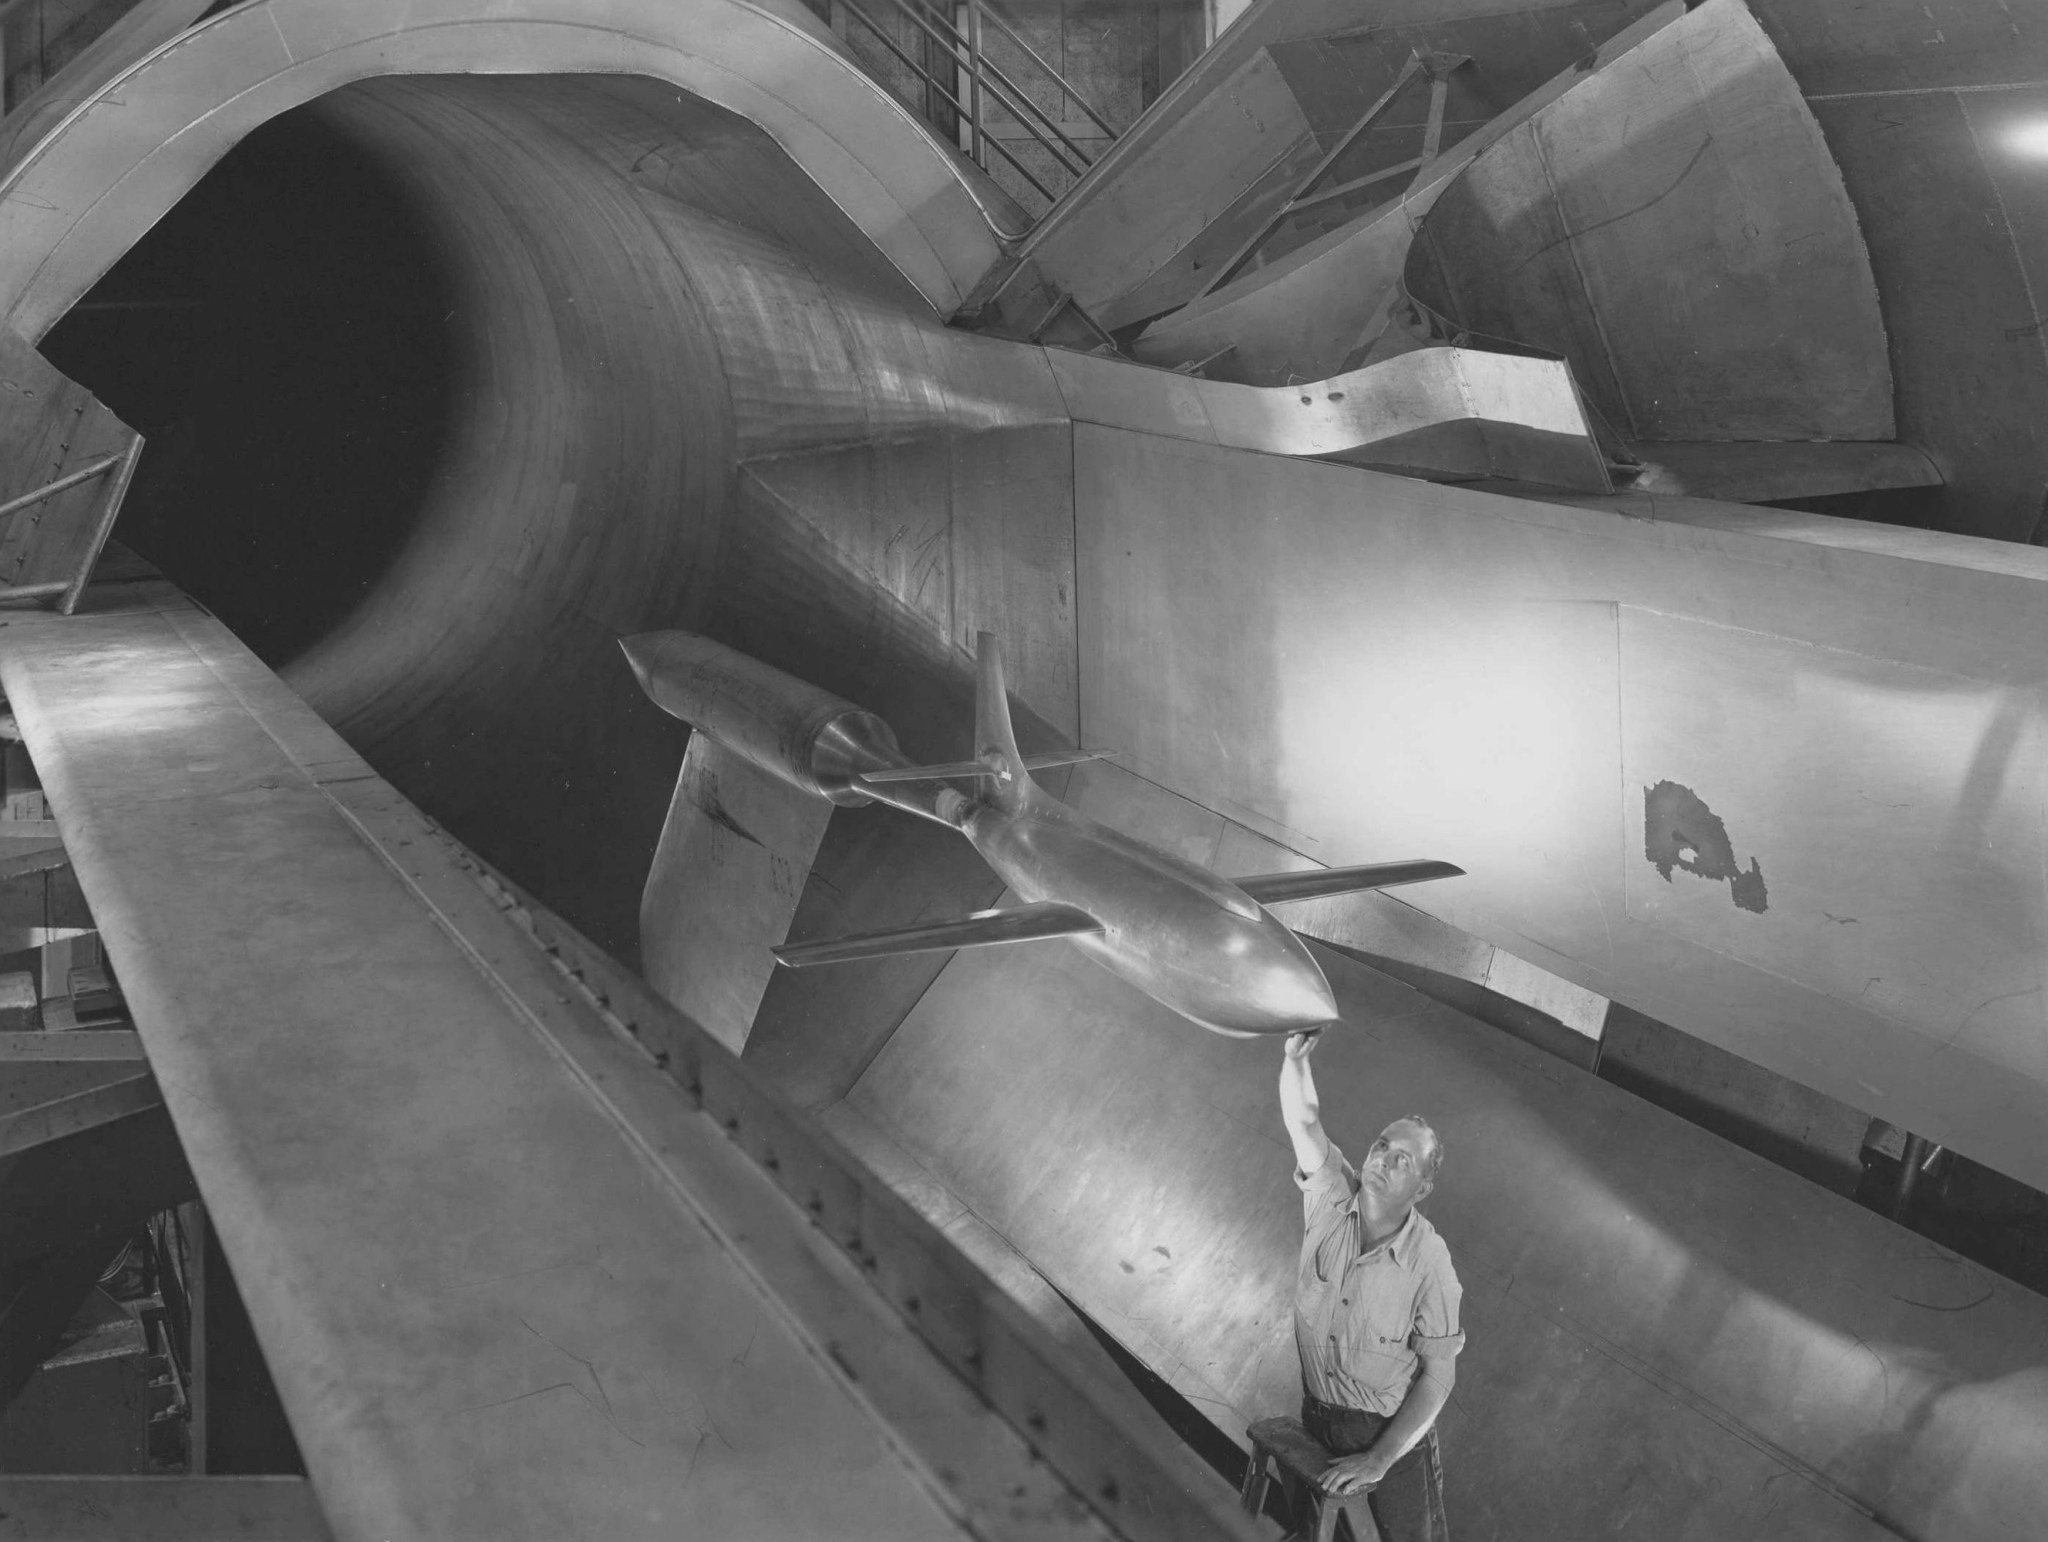 Bell X-1 model in Langley wind tunnel